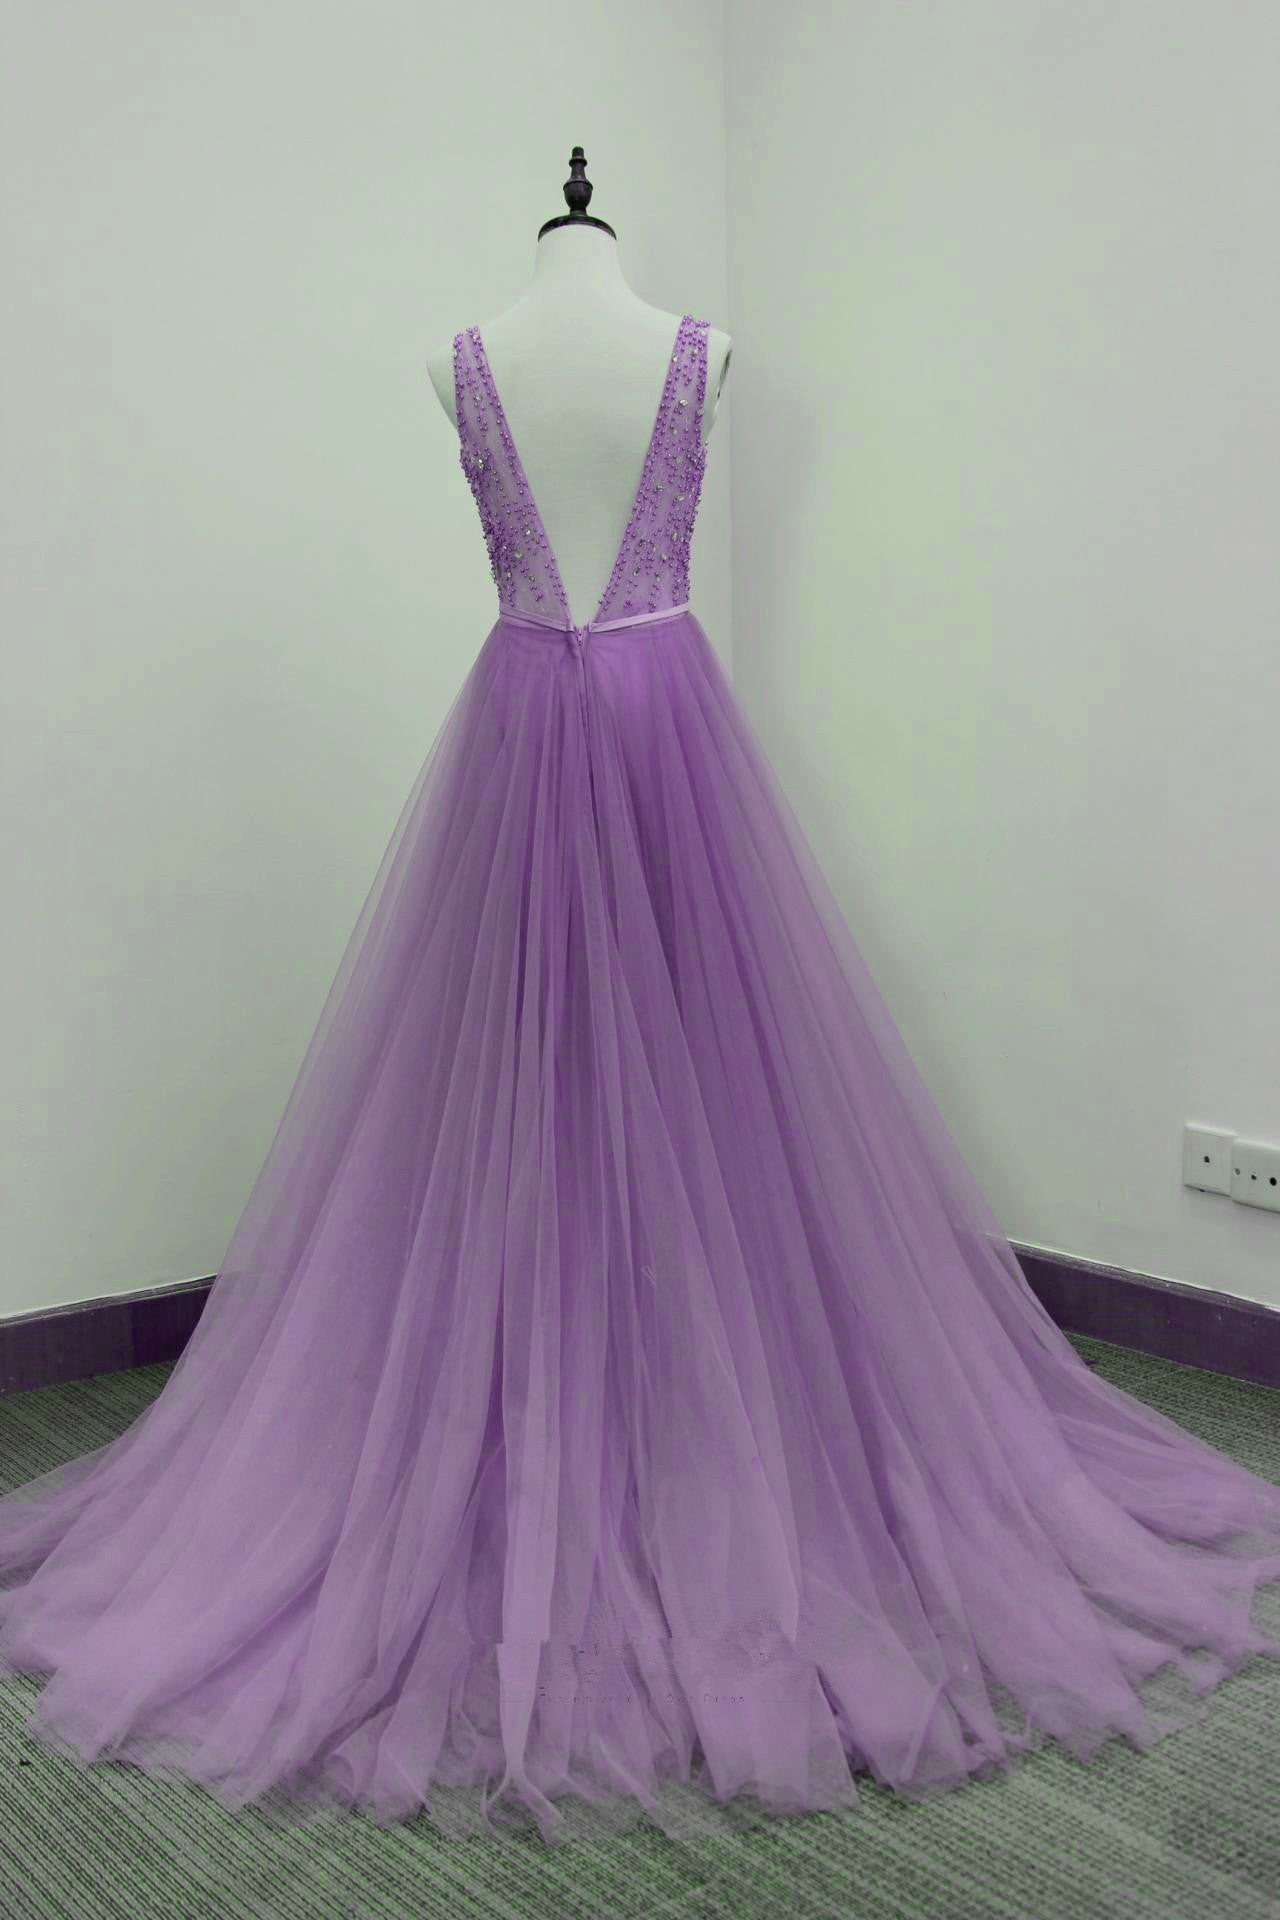 Beautiful Long Light Purple V-neckline Party Dress, Prom Dress